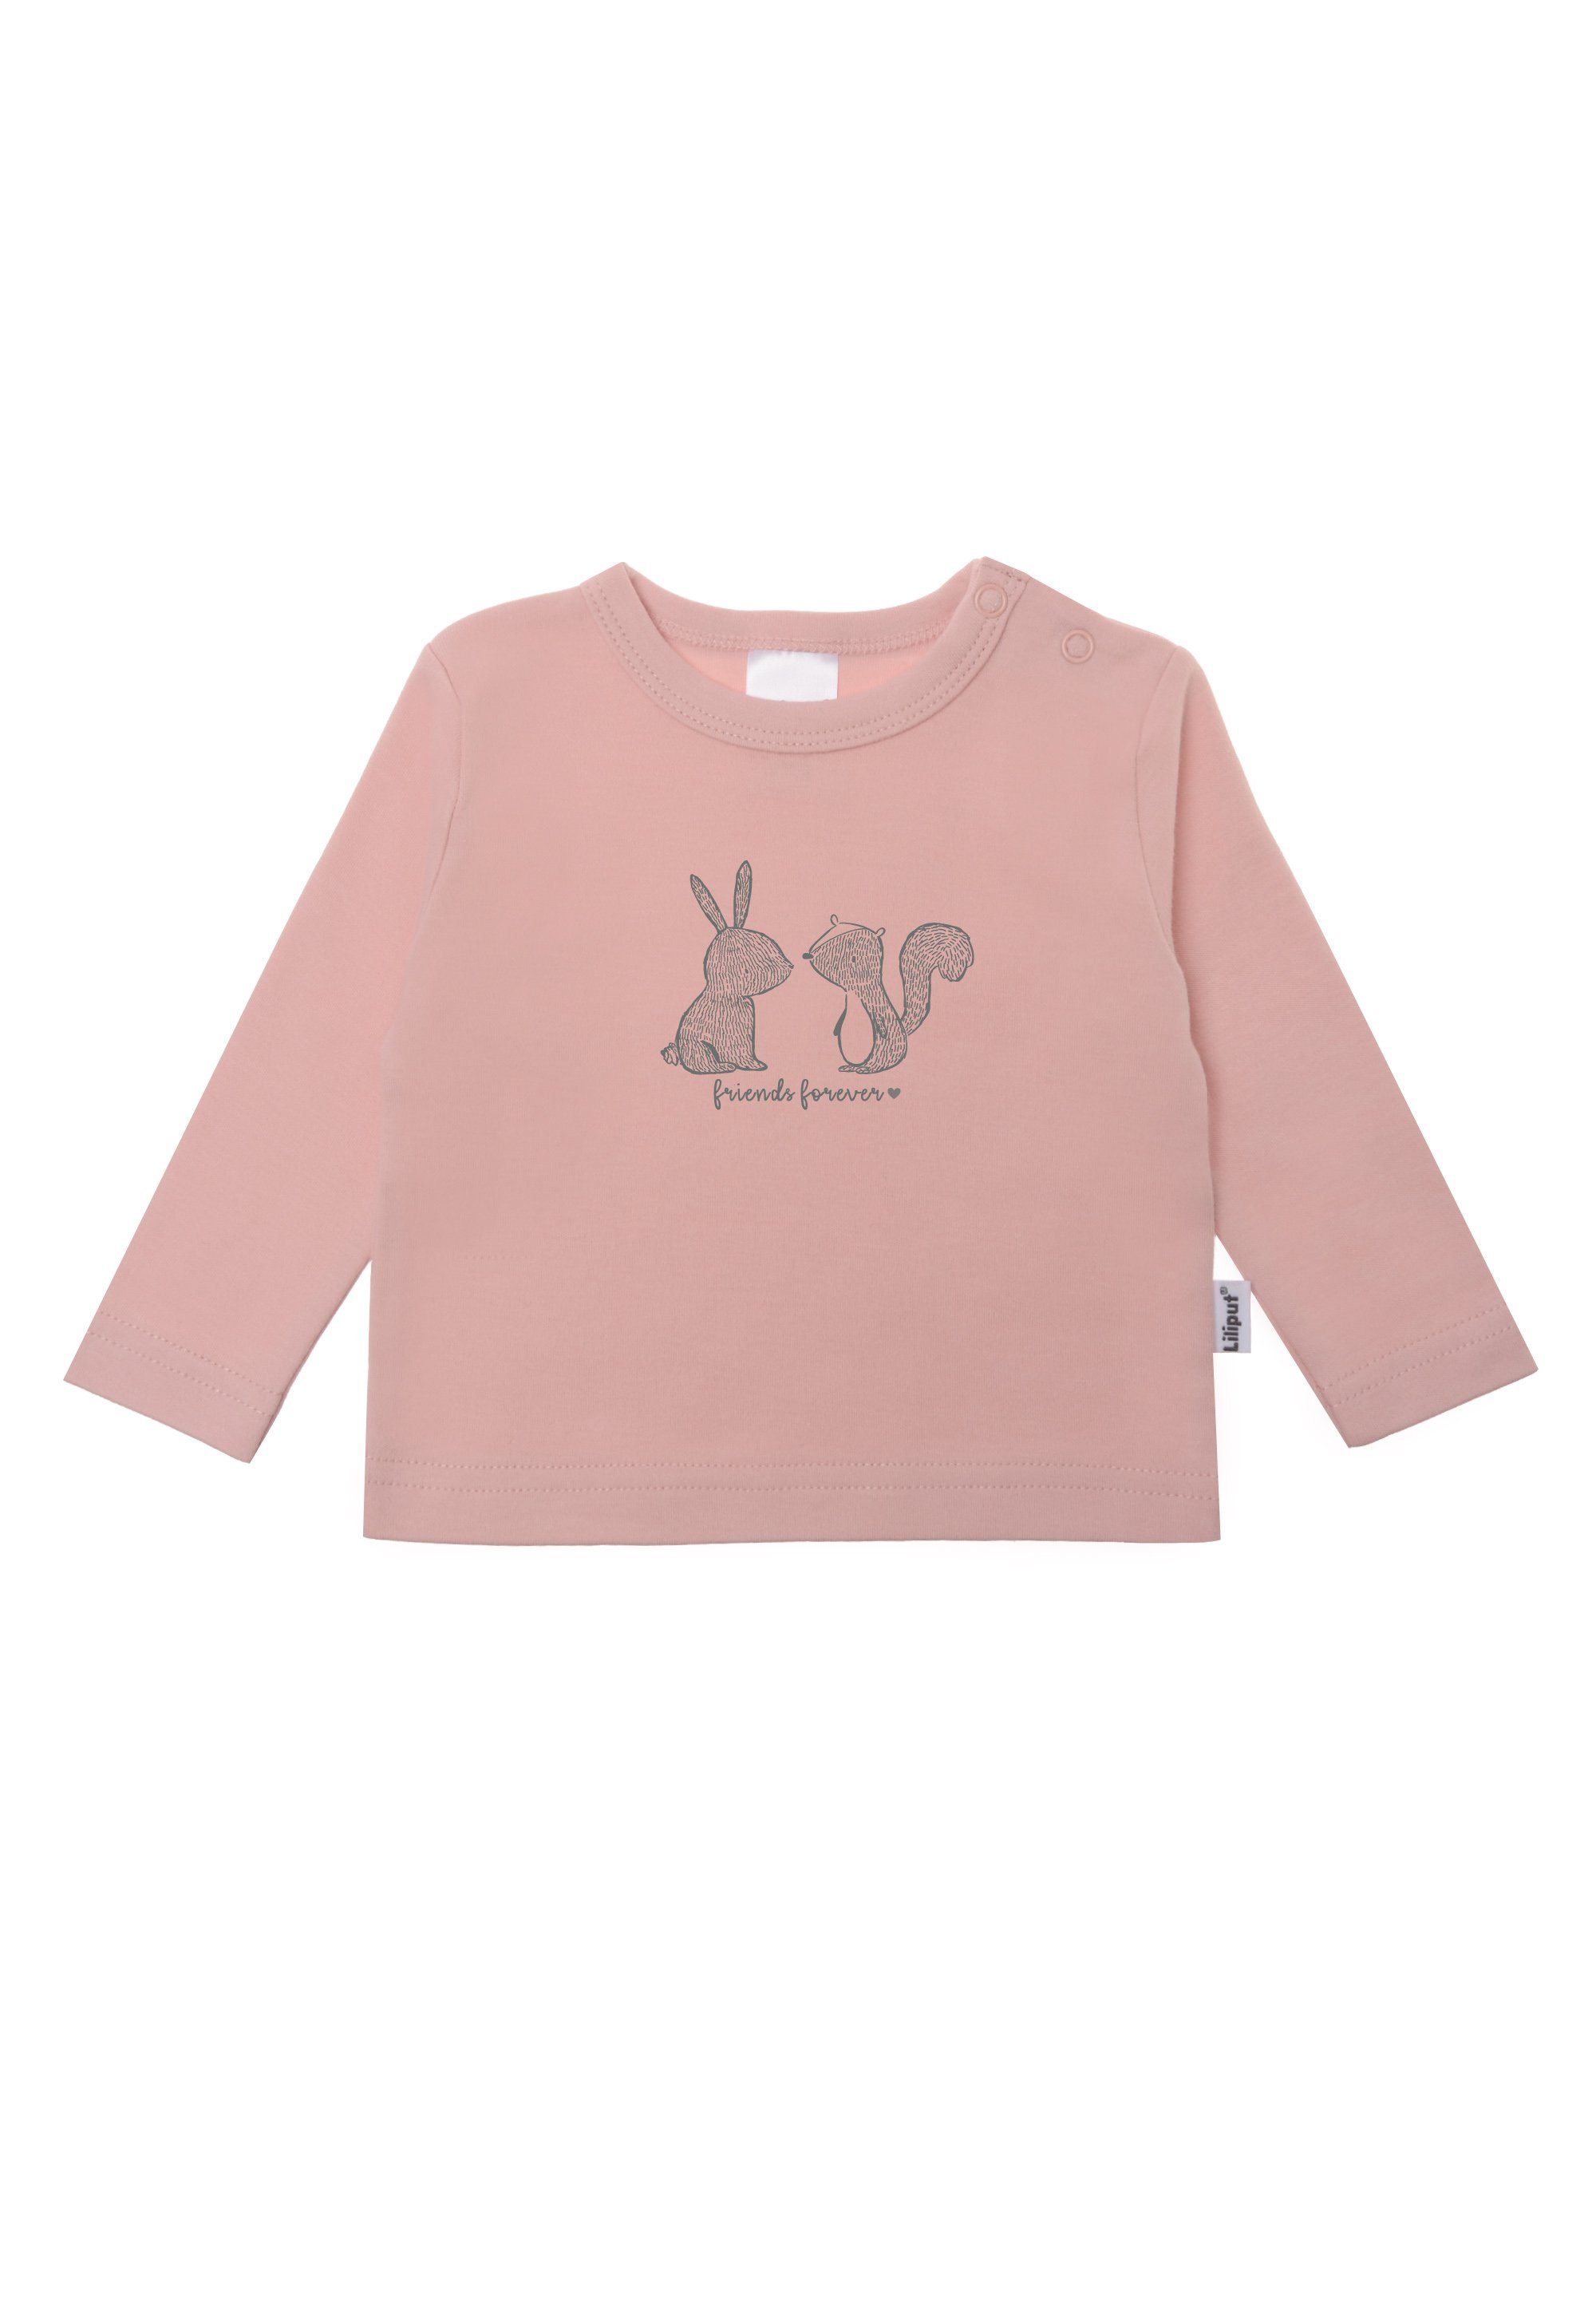 Liliput T-Shirt Friends forever aus weichem Baumwoll-Material